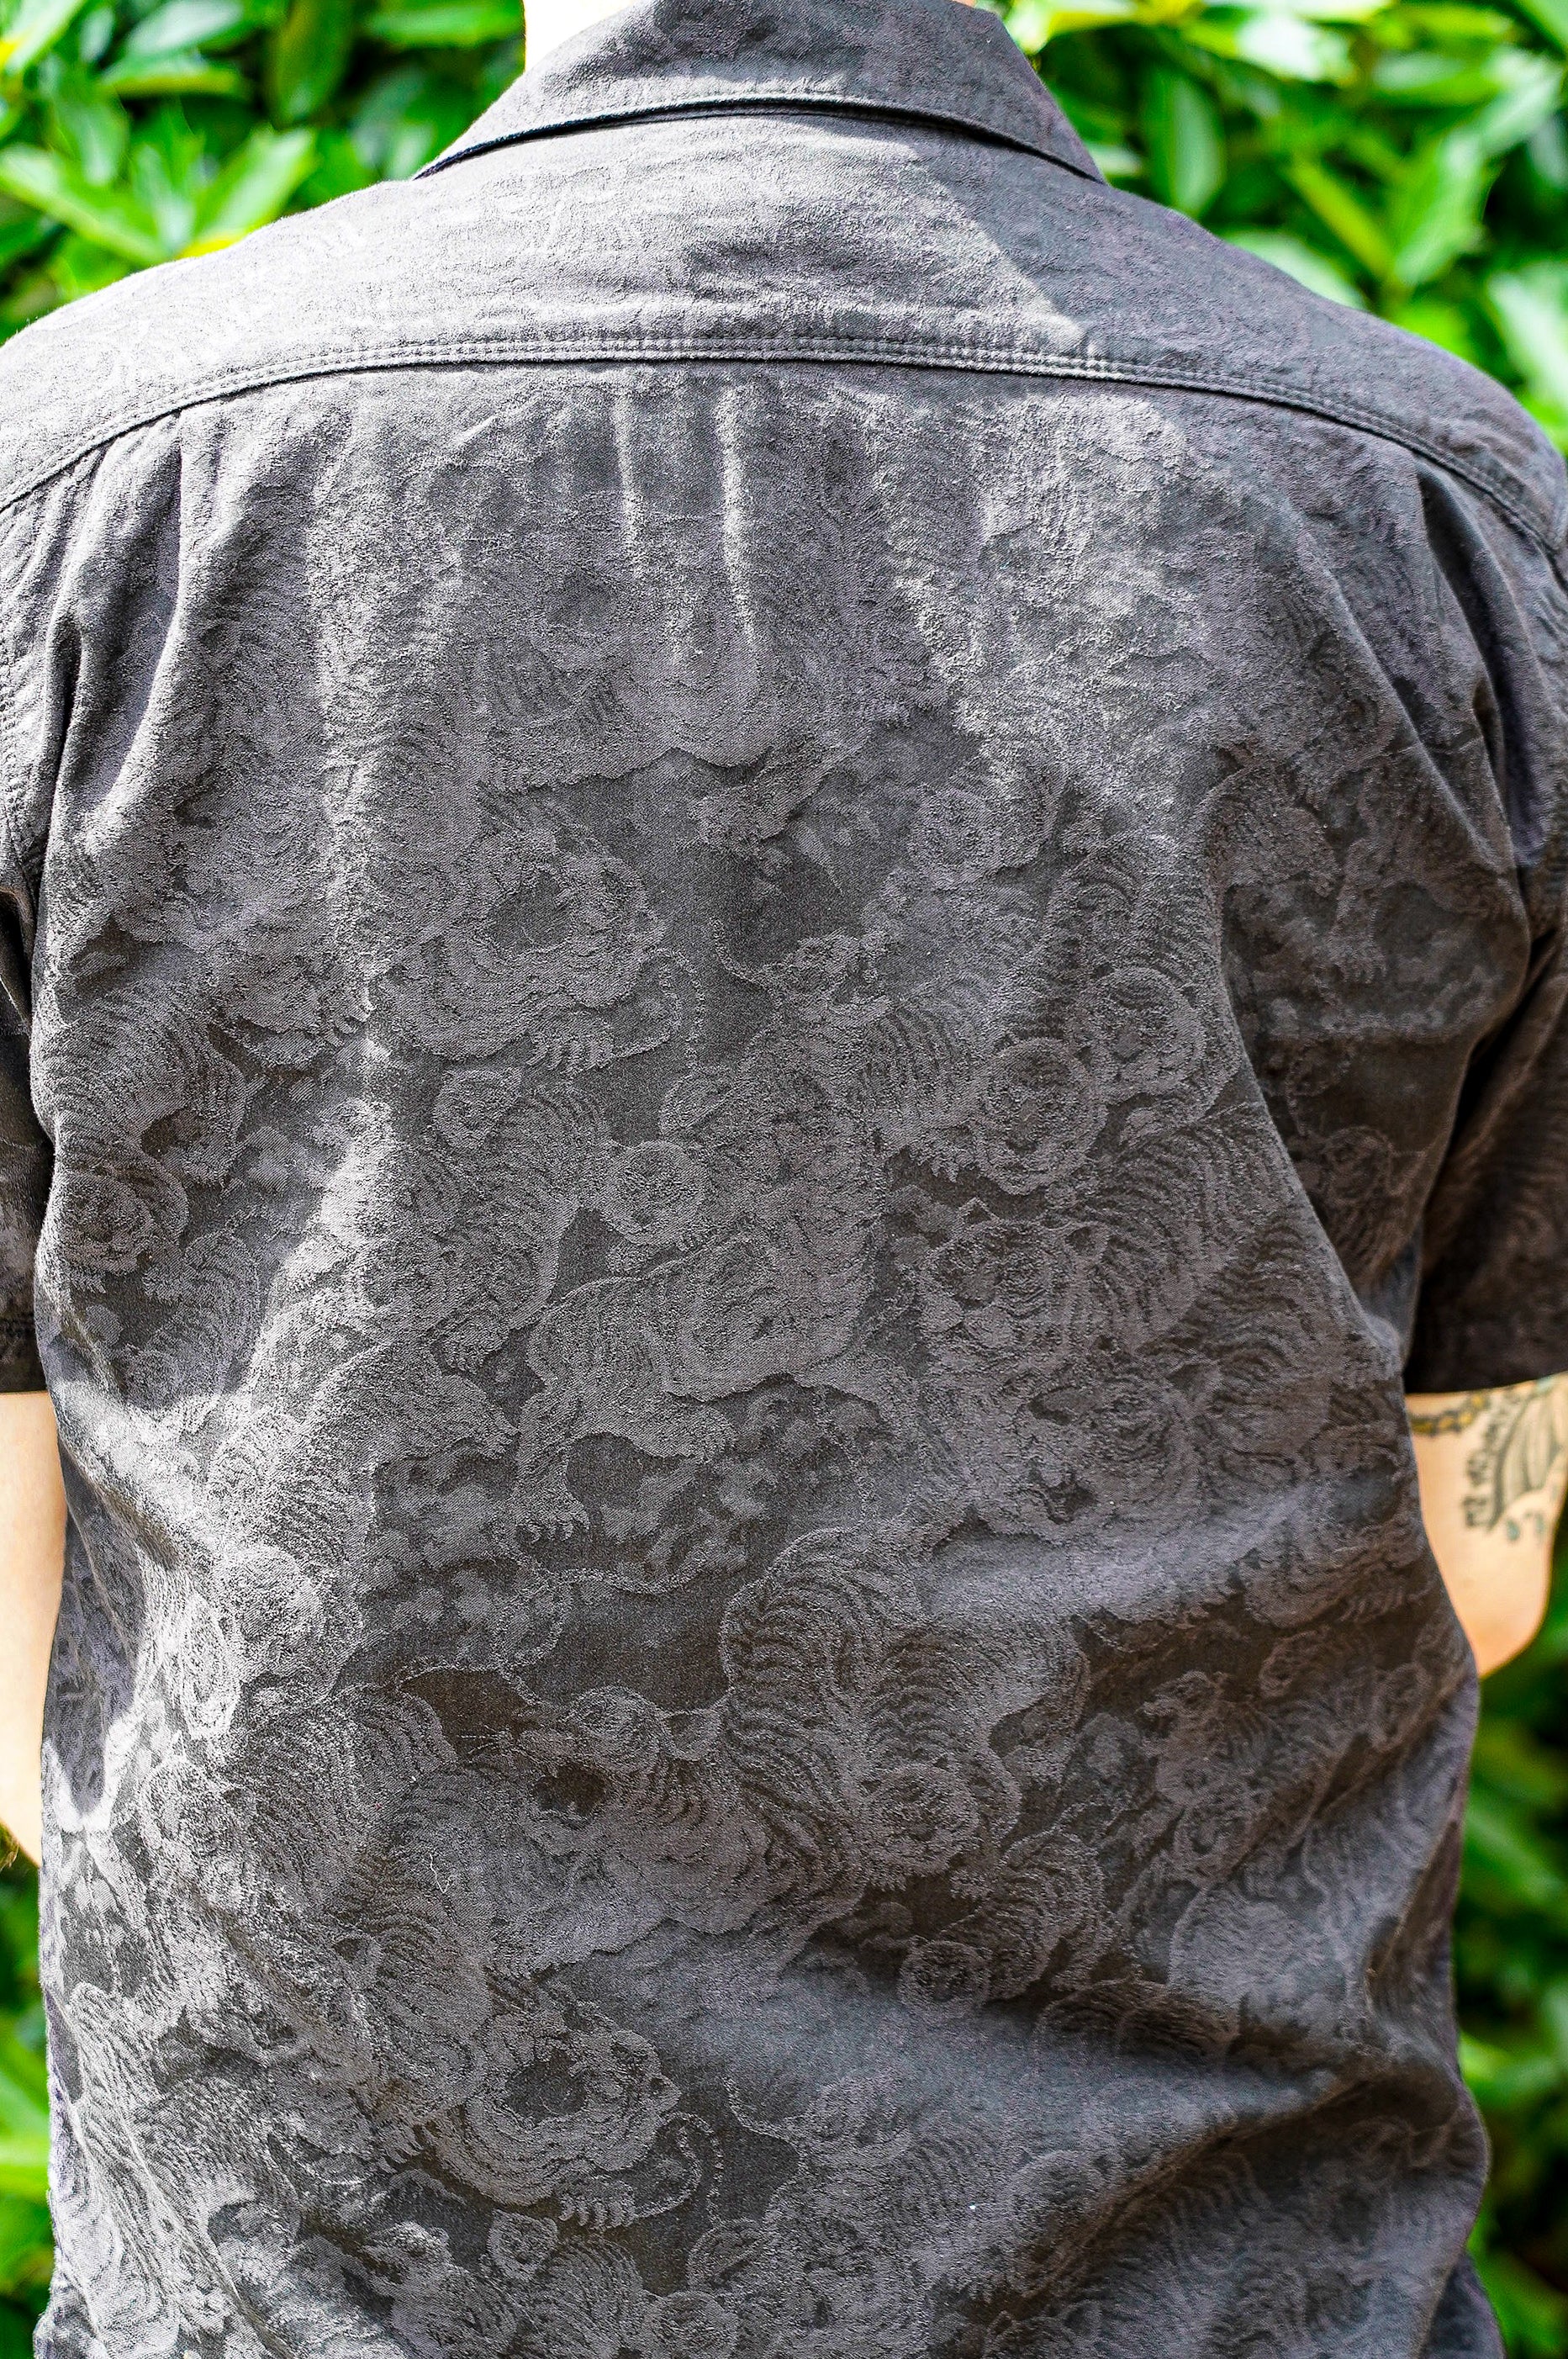 Freenote Cloth Hawaiian Tiger Shirt - All Black